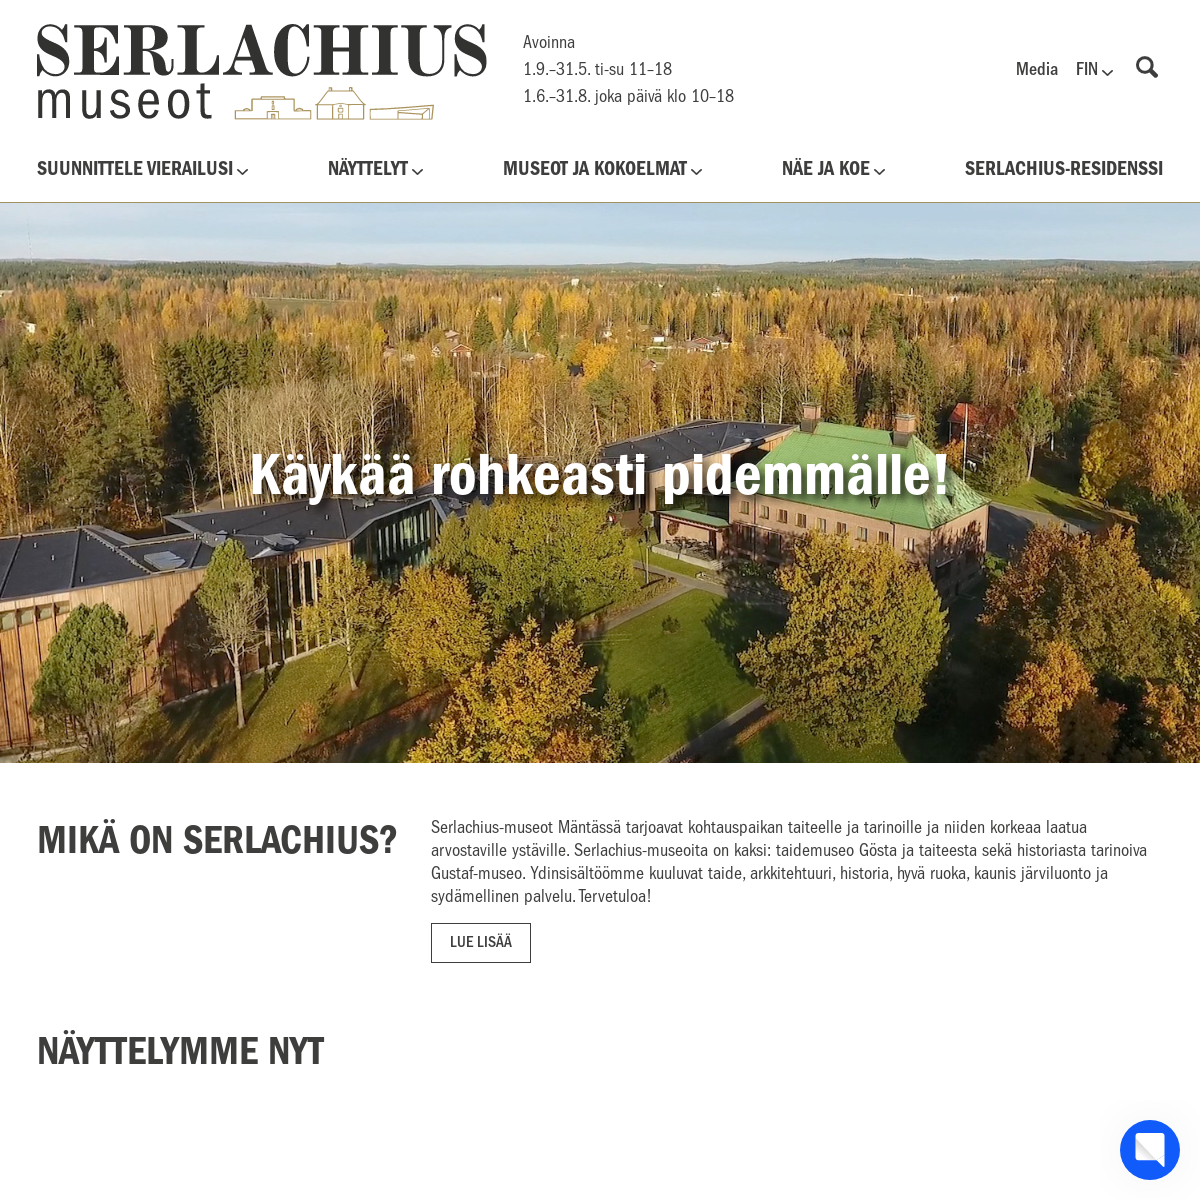 A complete backup of serlachius.fi